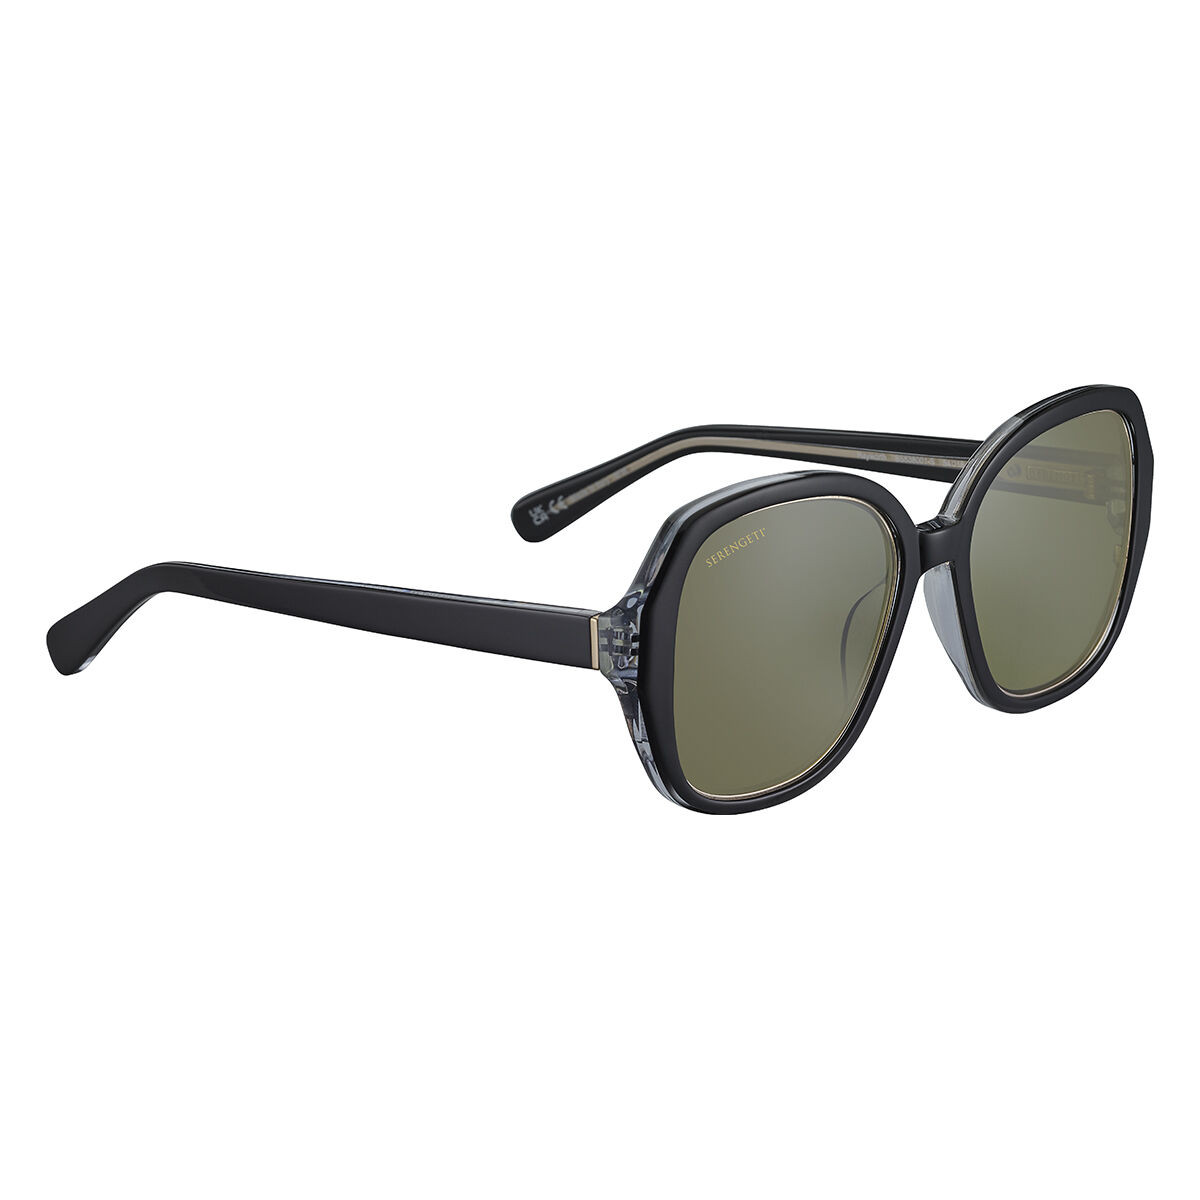 Share 289+ transparent polarized sunglasses